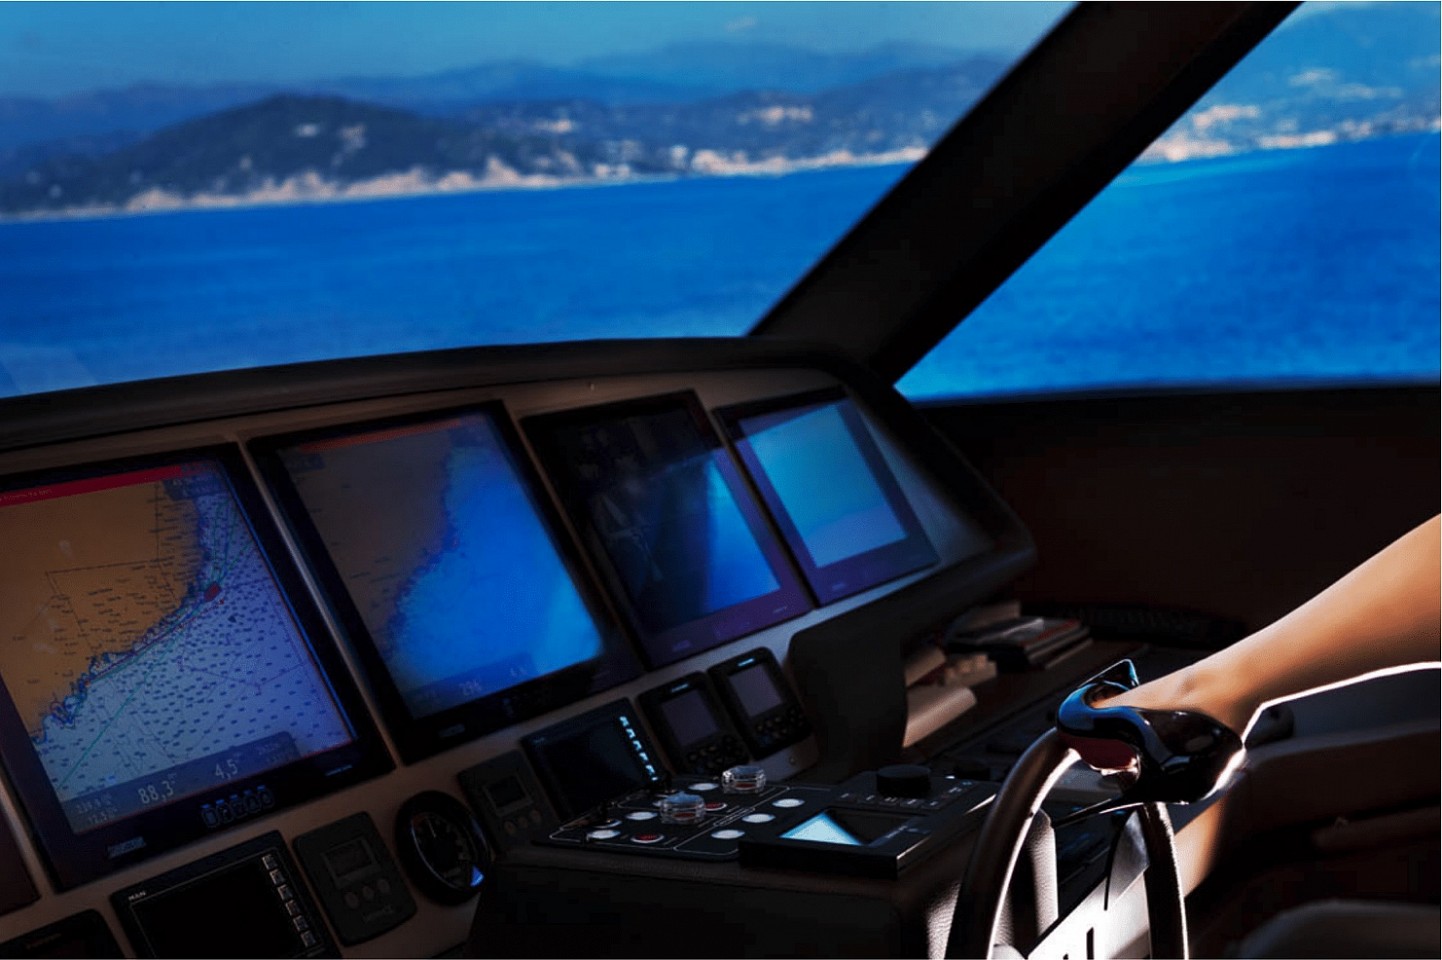 David Drebin, Steering Ship, 2019
Digital C Print, 48 x 72 and 30 x 45 inches